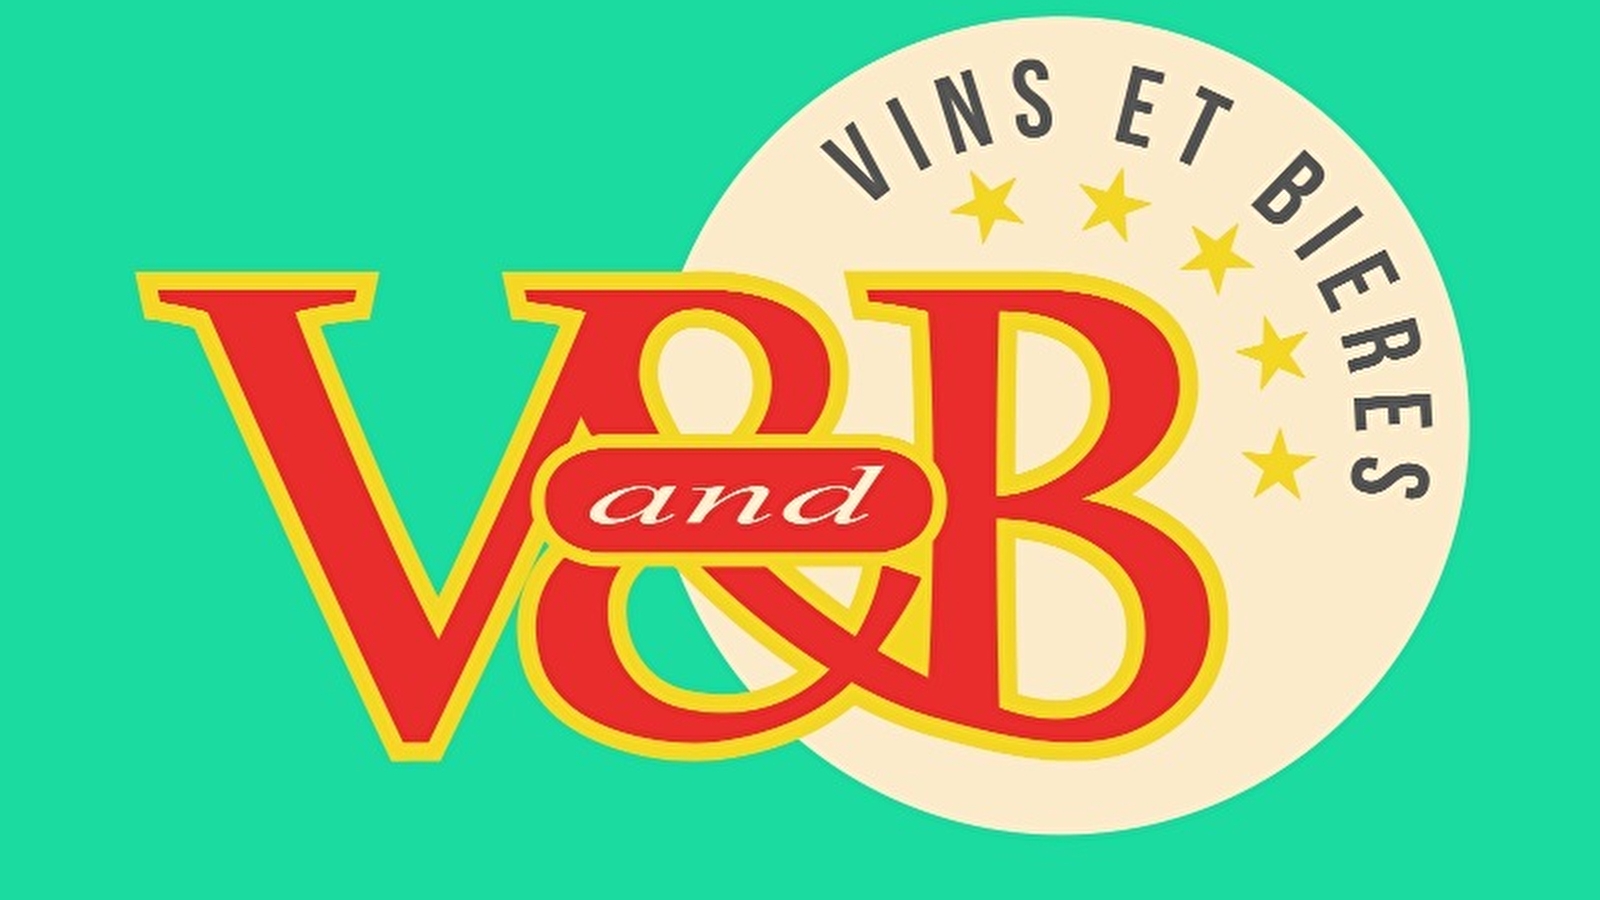 Cave et bar - V and B